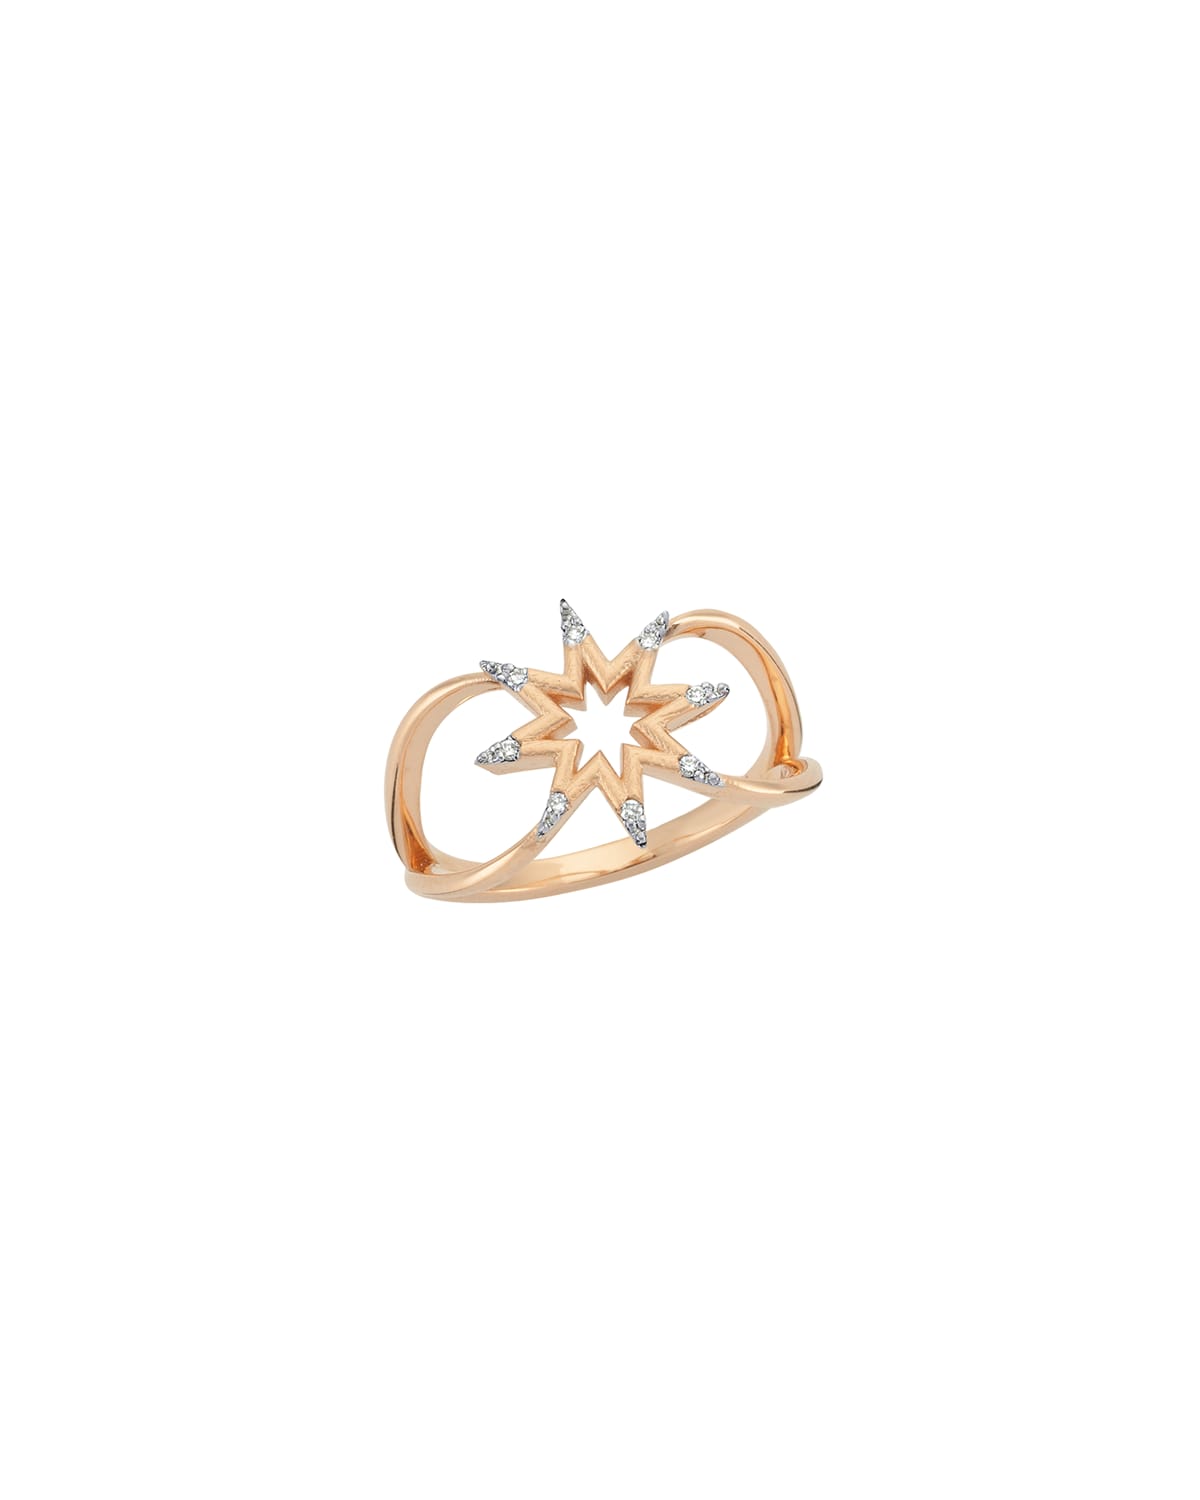 BeeGoddess Venus Star 14k Rose Gold Diamond Ring, Size 7